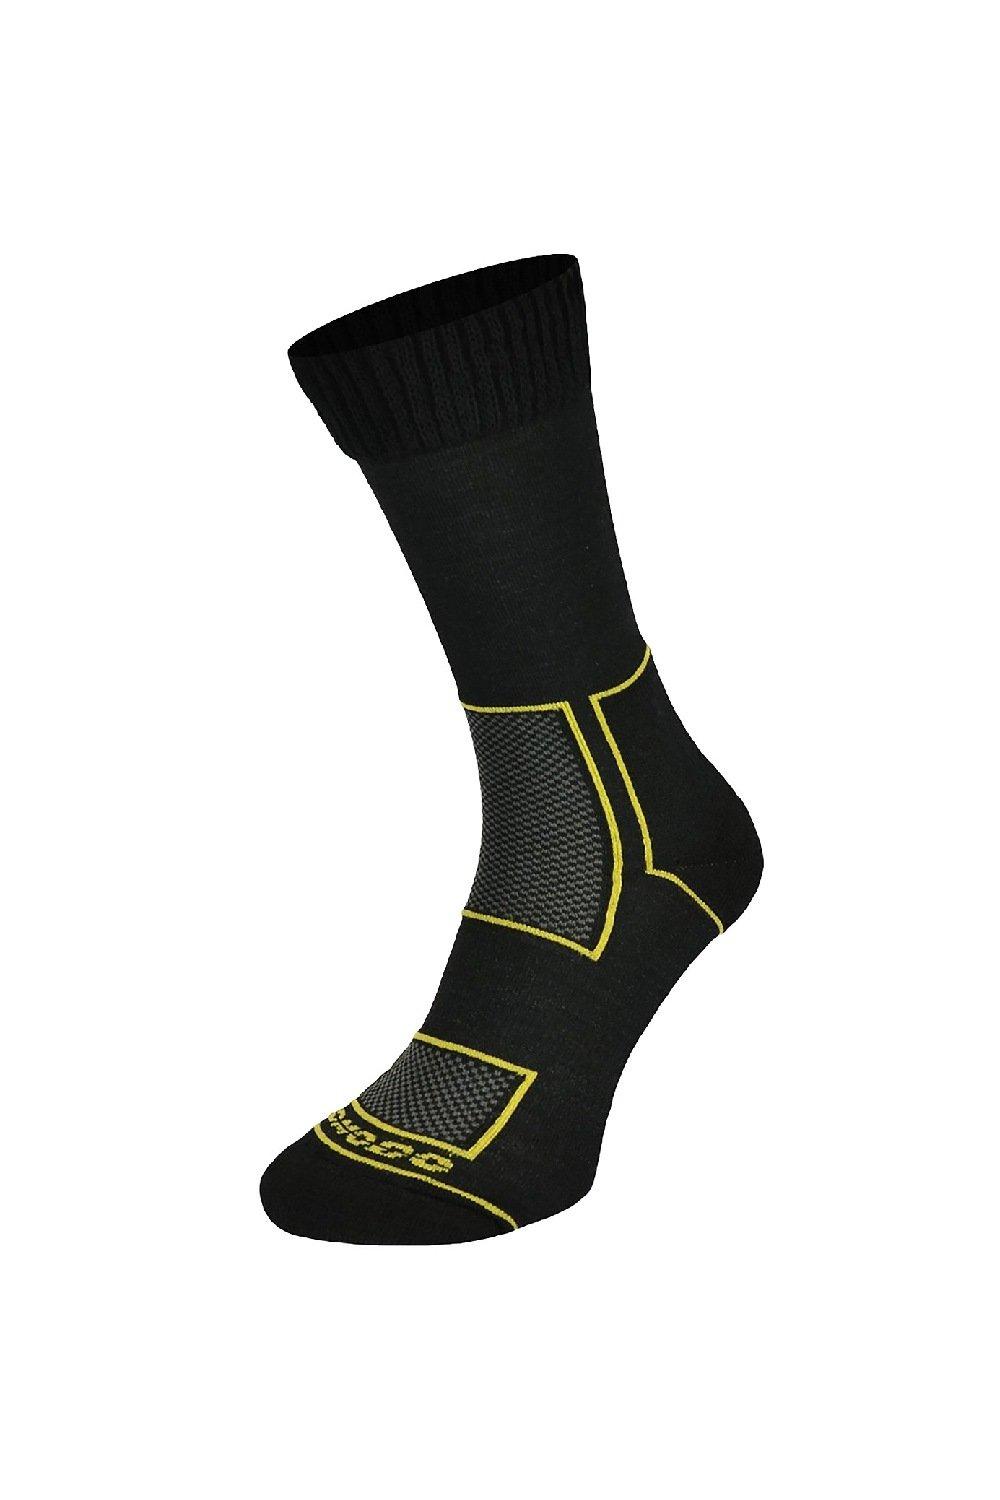 Merino Wool Work Boot Socks - Anti Blister Thick Crew Socks